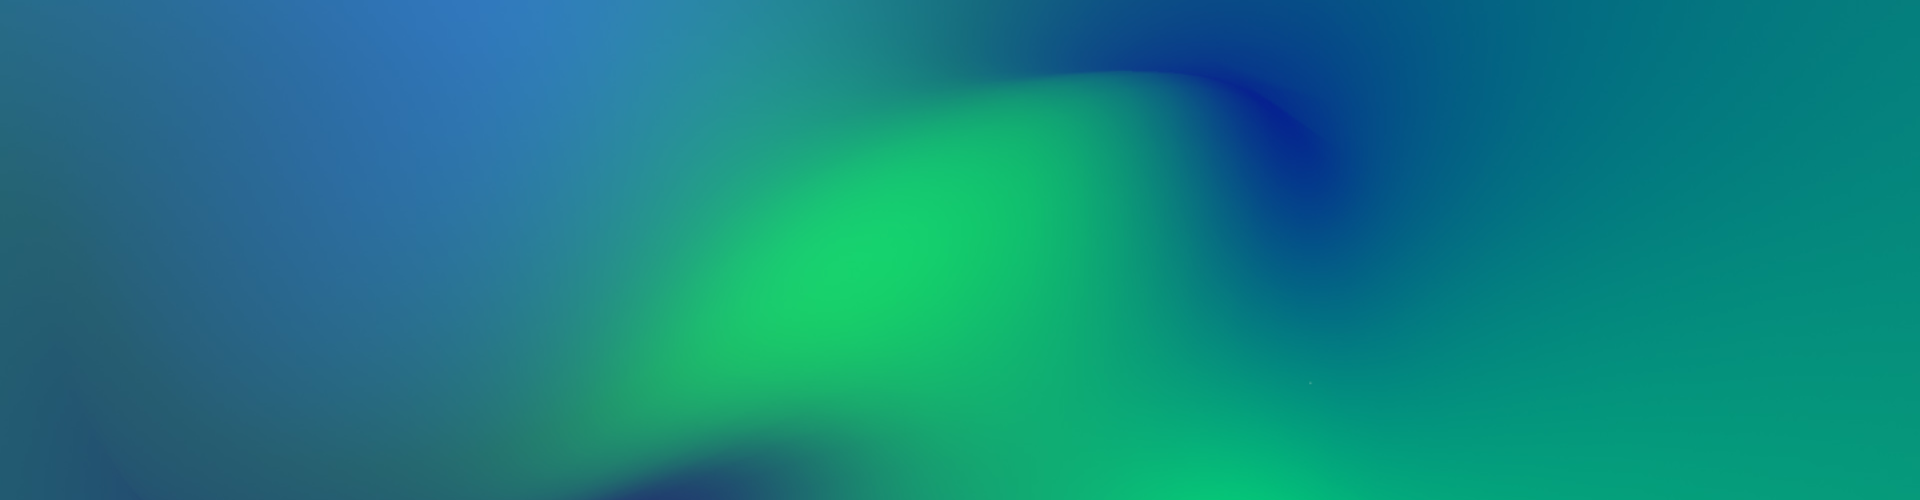 Wattn profil gradient blå grønn 1